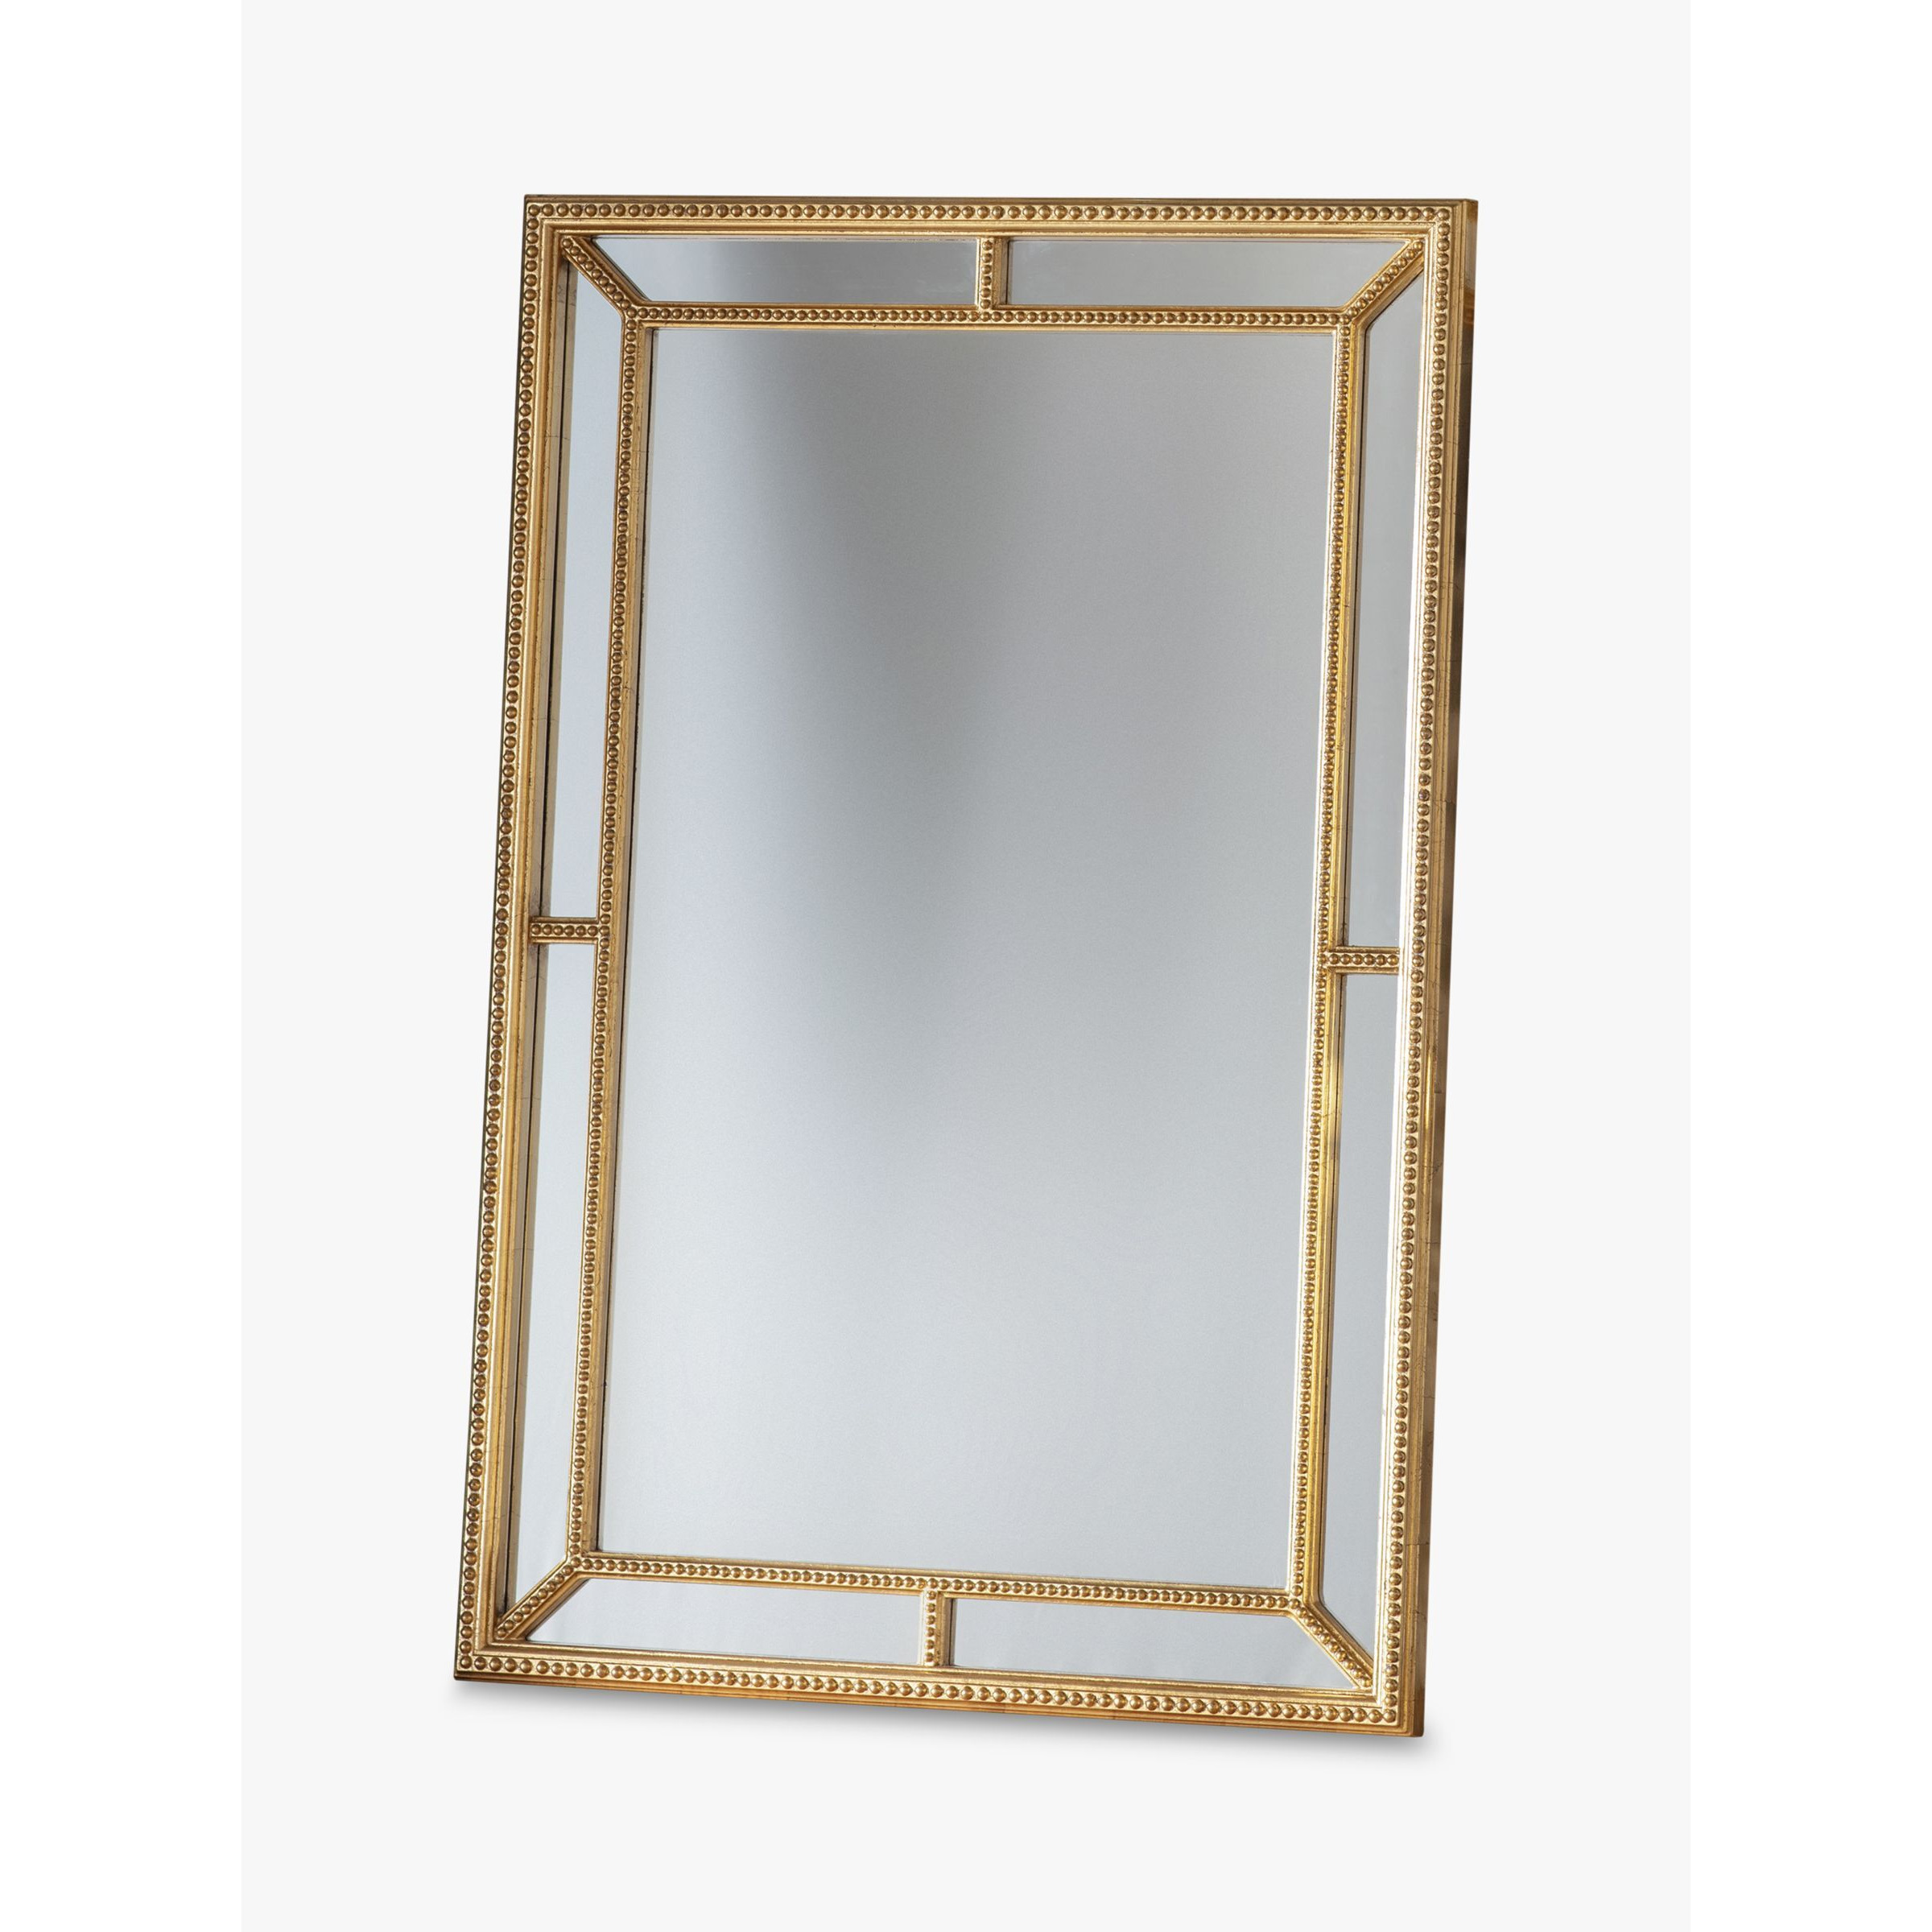 Gallery Direct Sinatra Rectangular Decorative Beaded Wall Mirror, 121 x 80cm, Gold - image 1